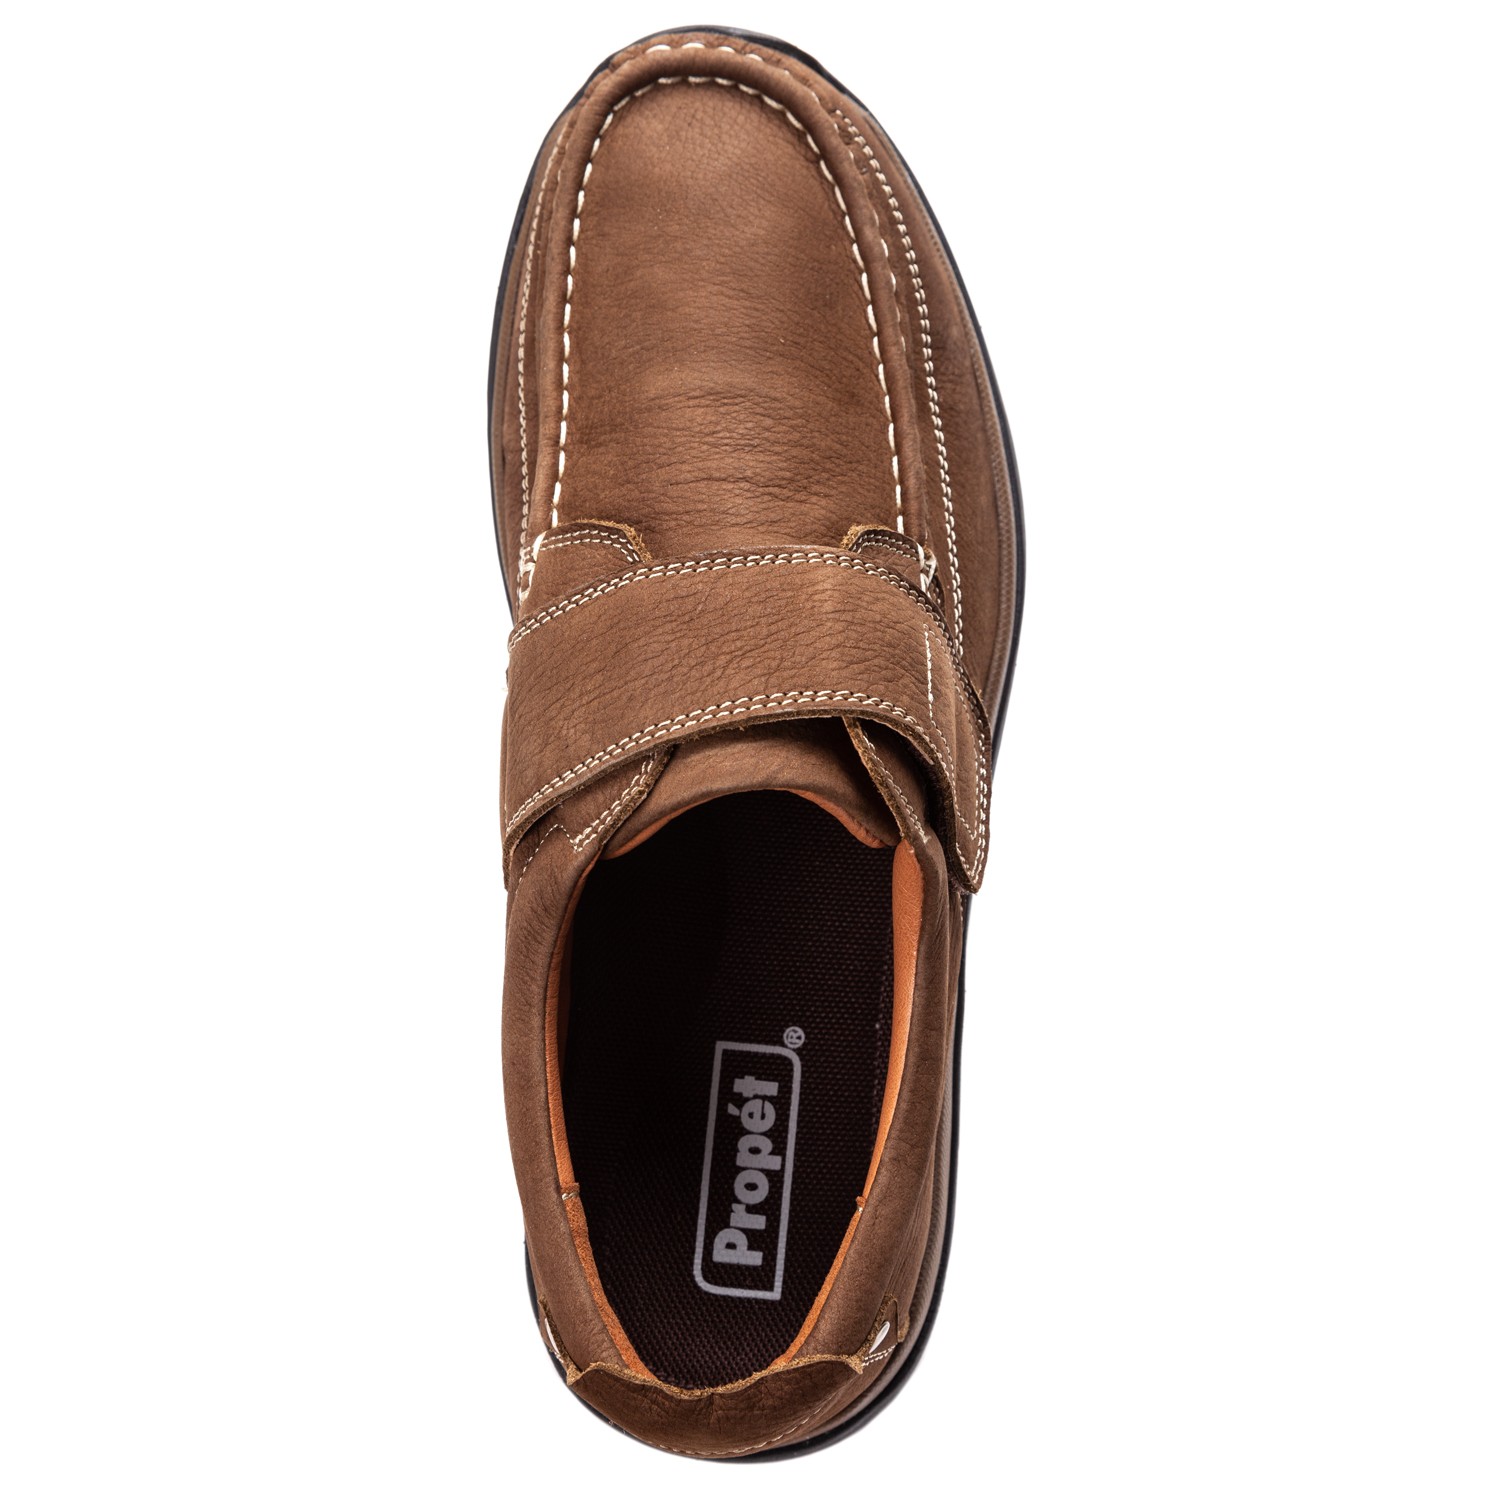 Propet Men's Porter Loafer Casual Shoes - image 4 of 6